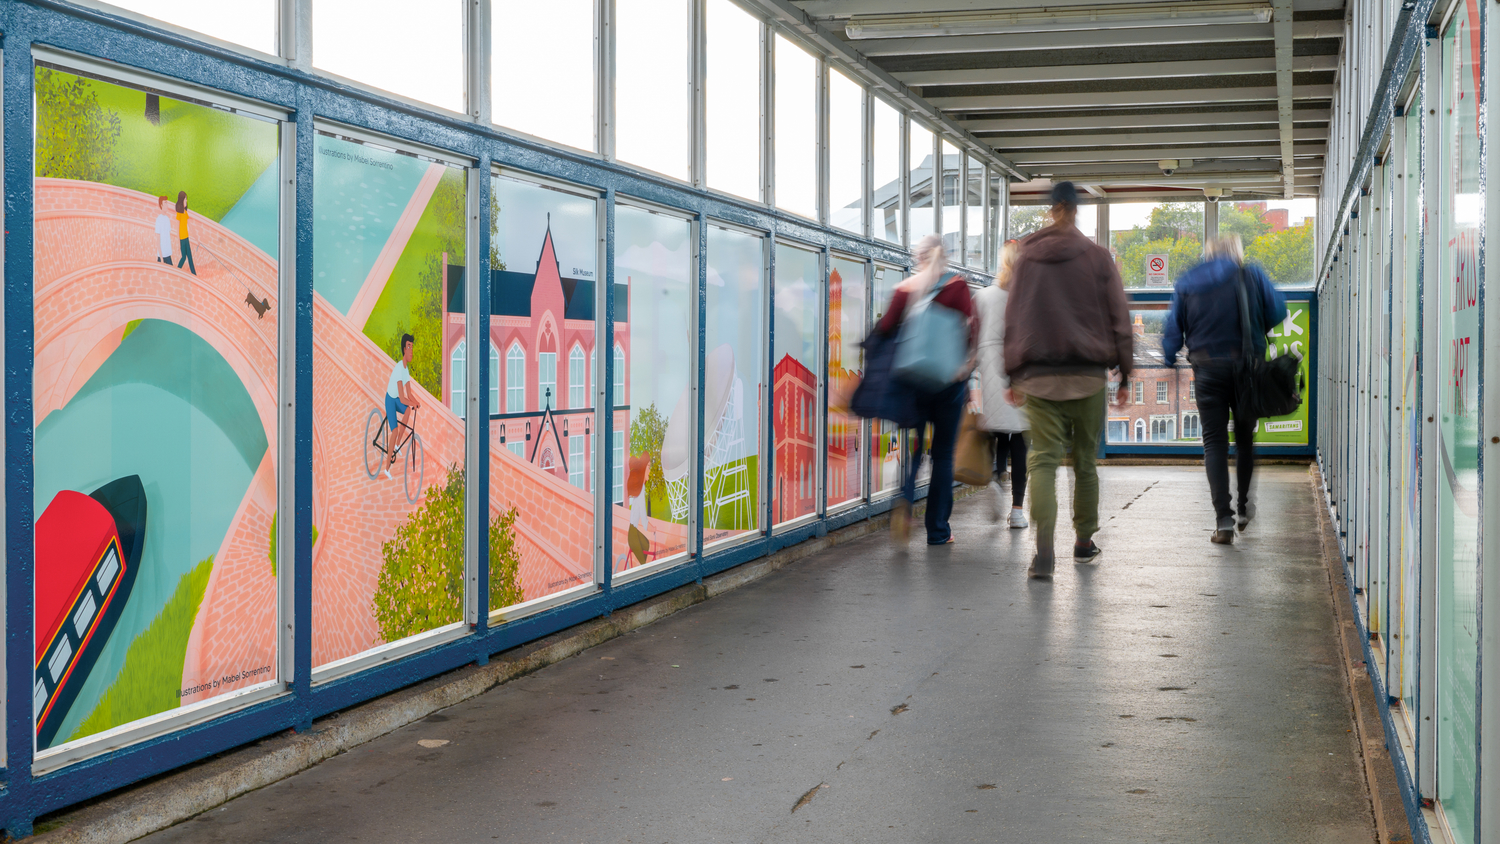 Macclesfield train station footbridge illustration